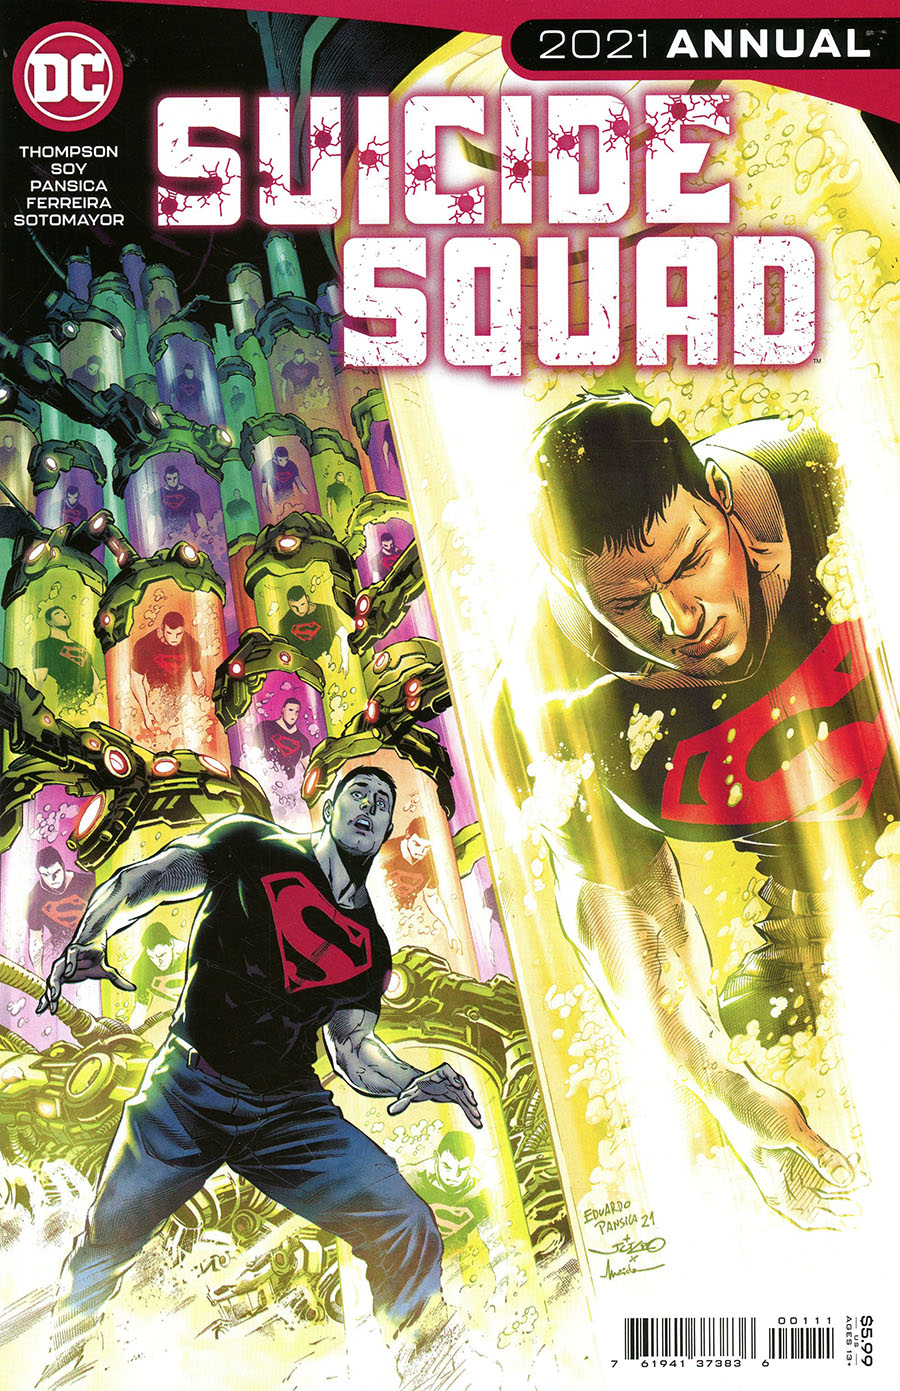 Suicide Squad Vol 6 2021 Annual #1 Cover A Regular Eduardo Pansica Cover